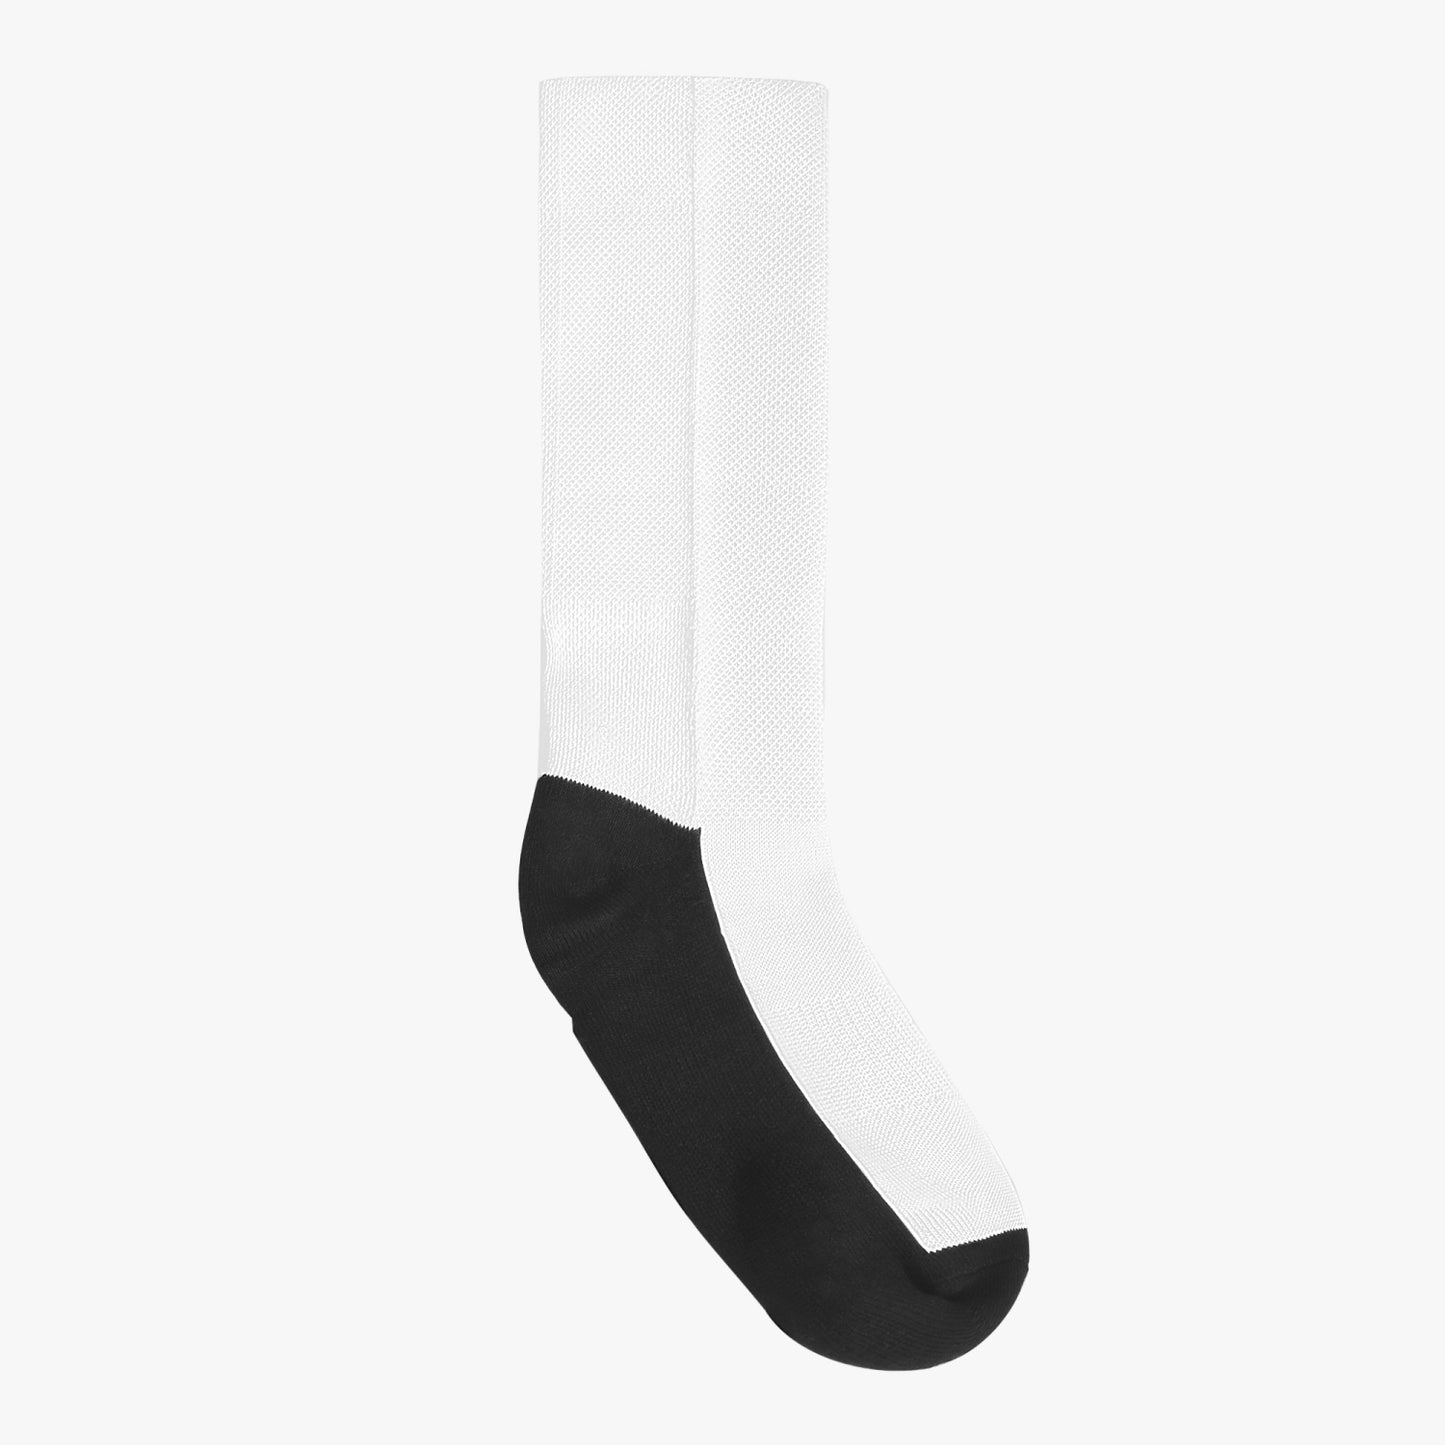 FORMULA FORD OFFICIAL Reinforced Sports Socks